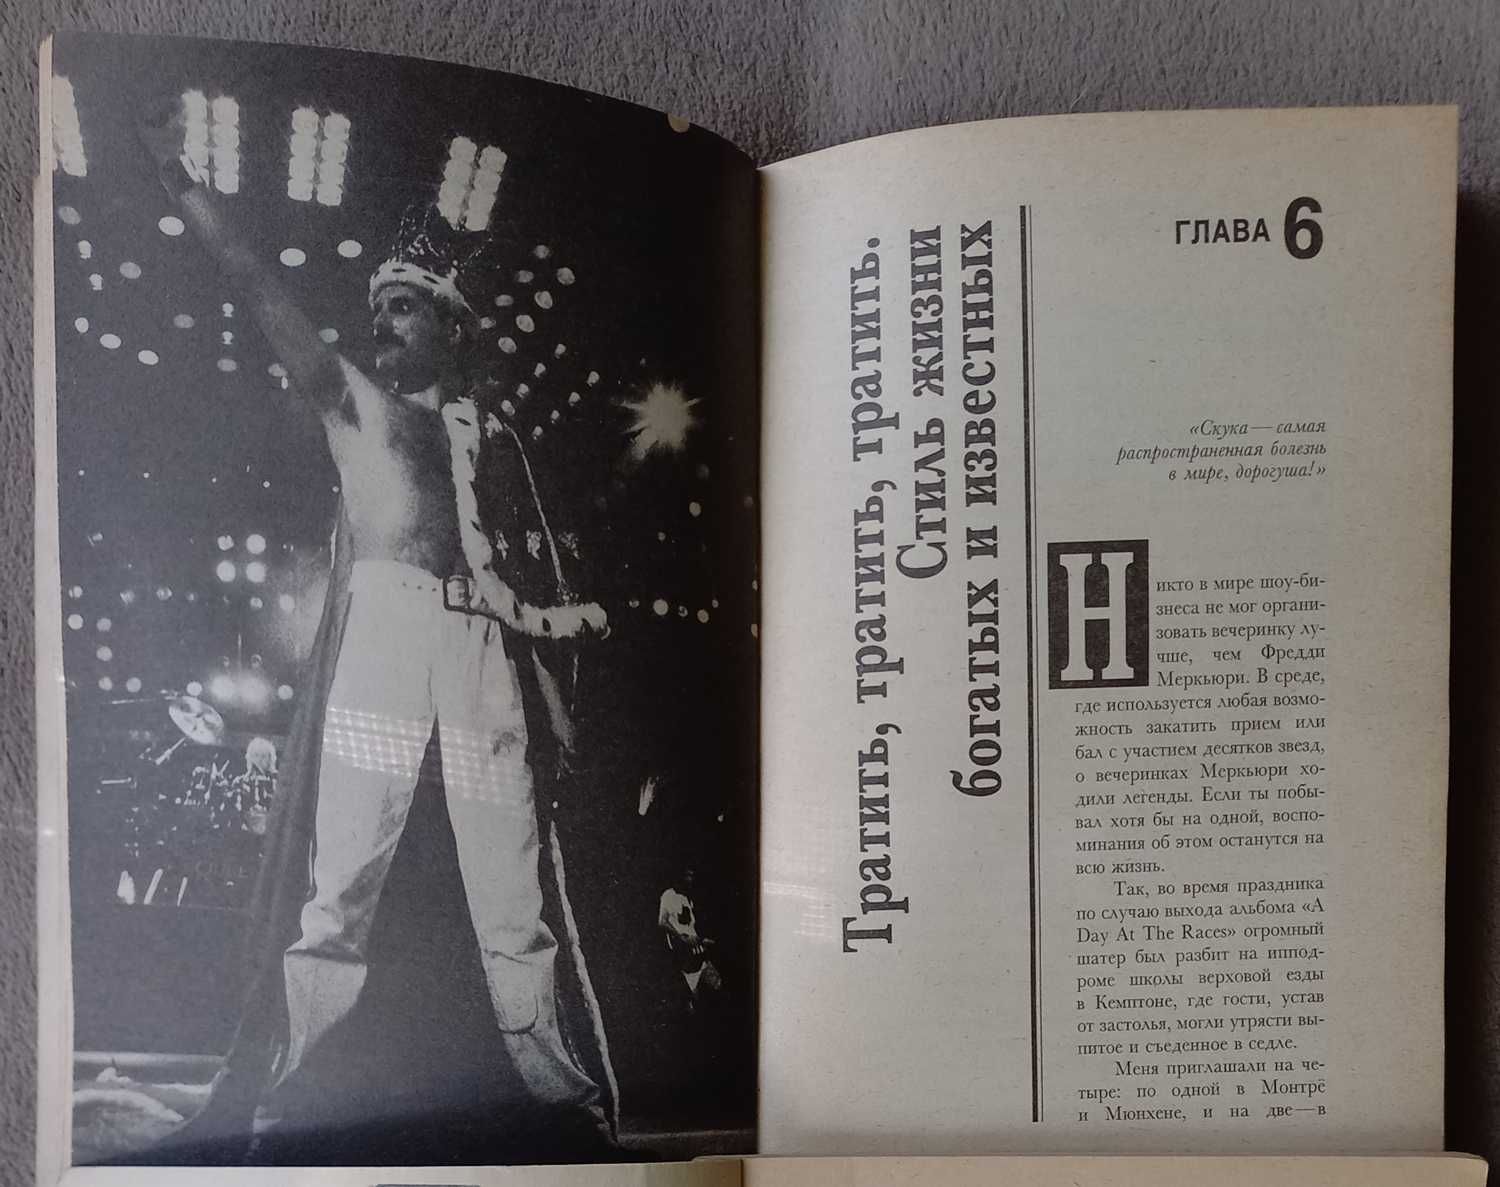 Фредди Меркьюри - книги о музыке, рок музыка